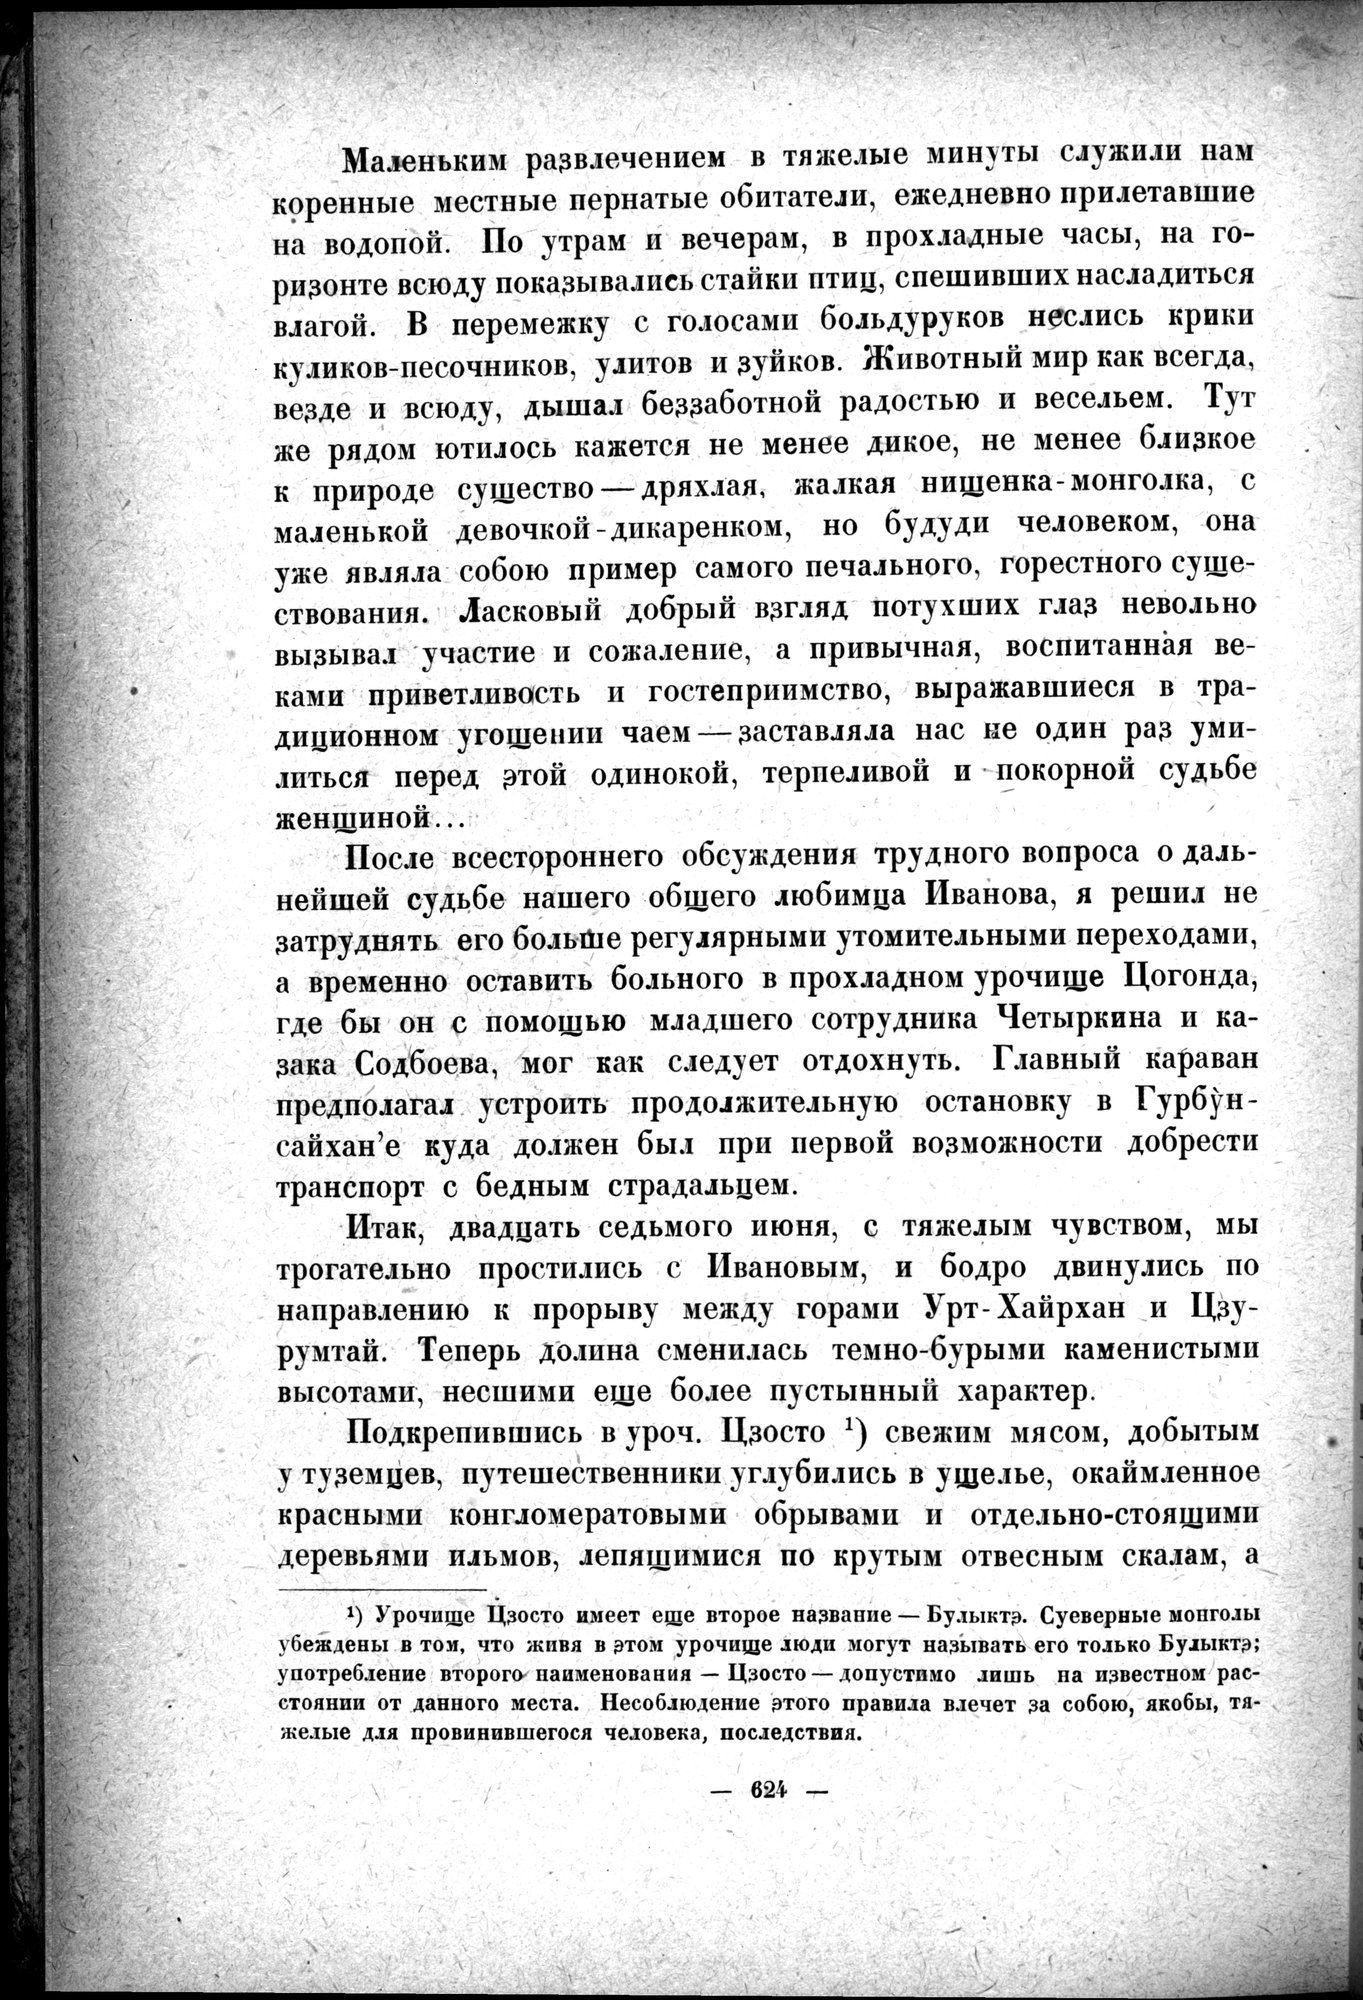 Mongoliya i Amdo i mertby gorod Khara-Khoto : vol.1 / Page 714 (Grayscale High Resolution Image)